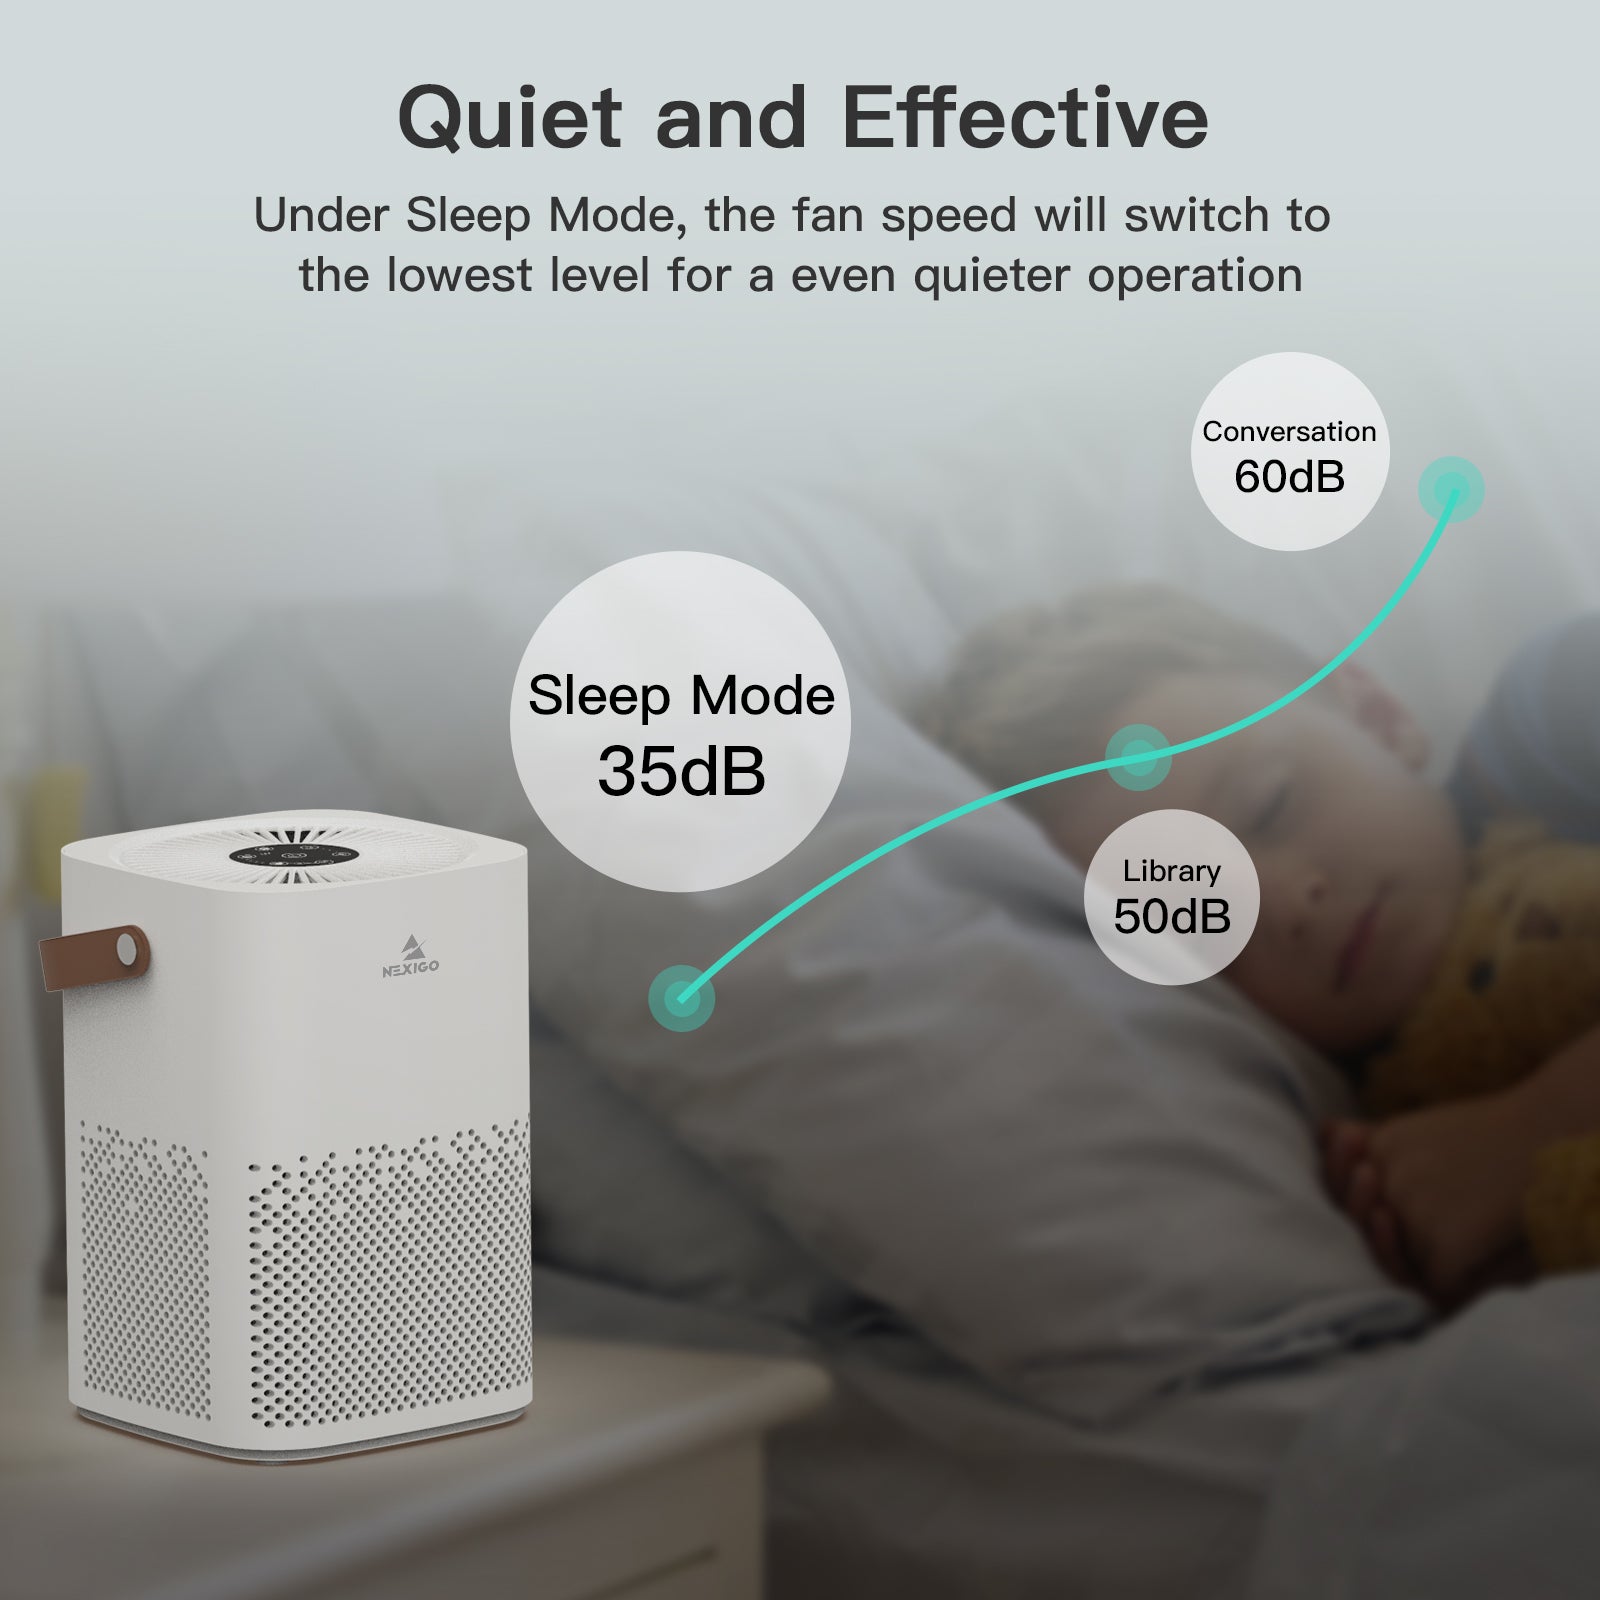 NexiGo mini air purifier is quiet and effective